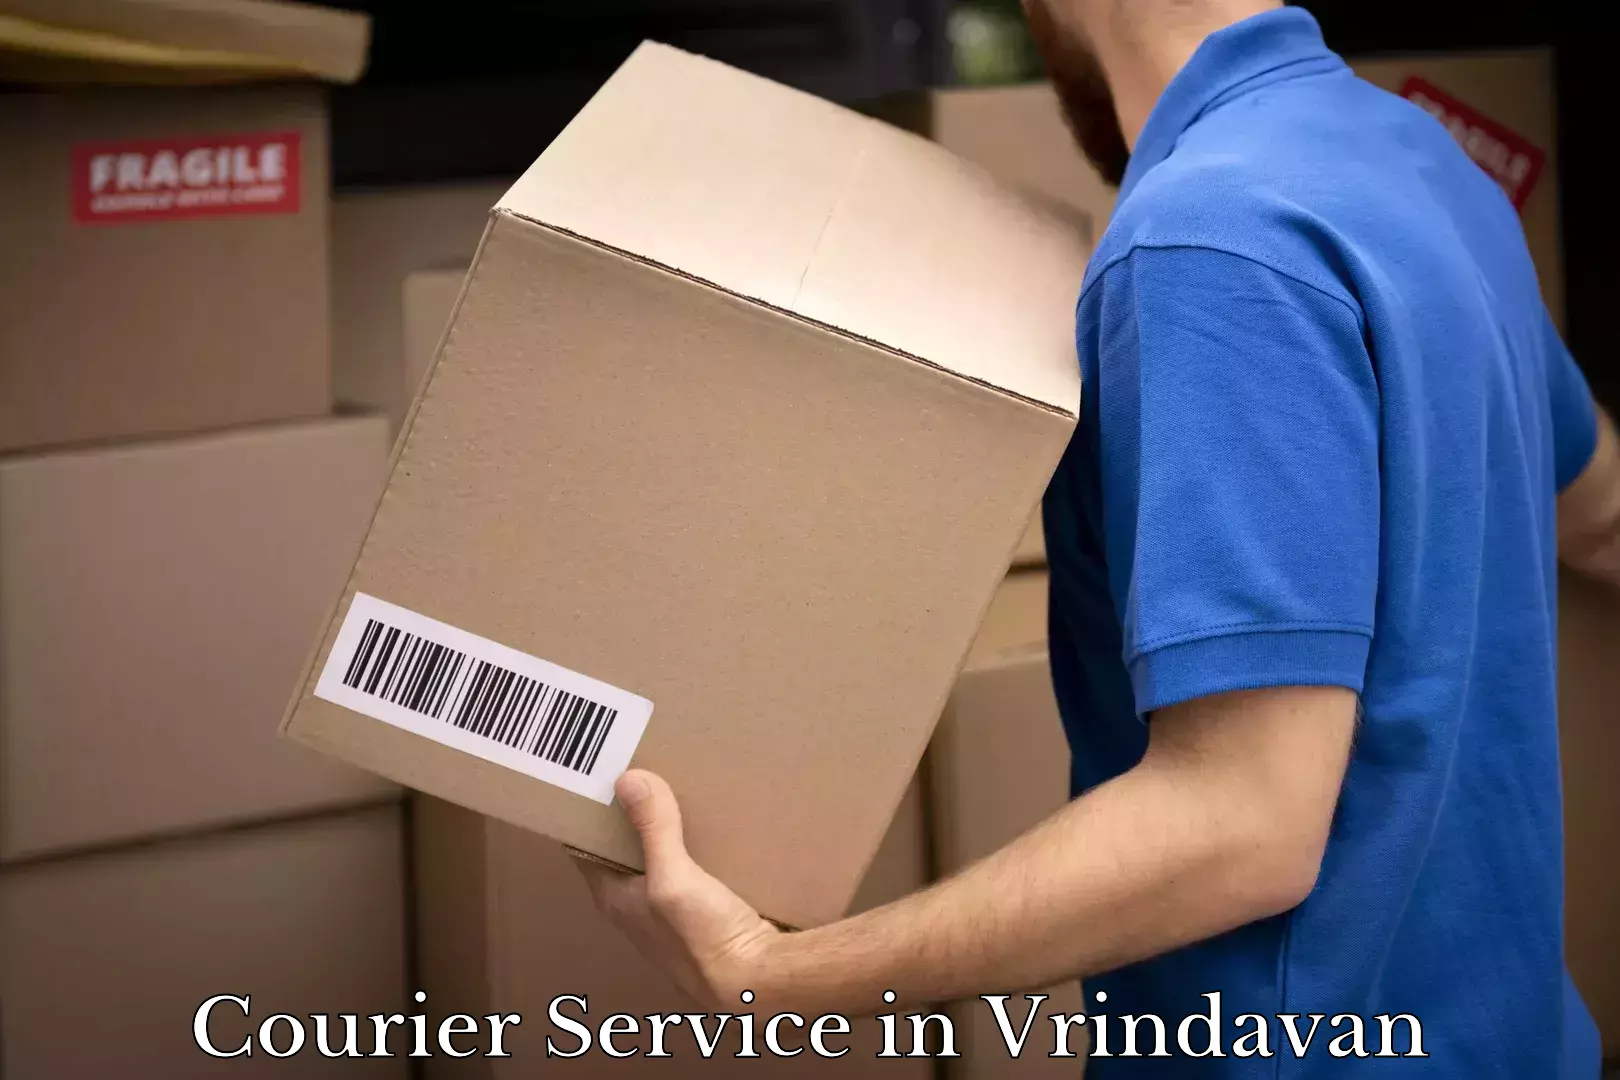 Express delivery network in Vrindavan